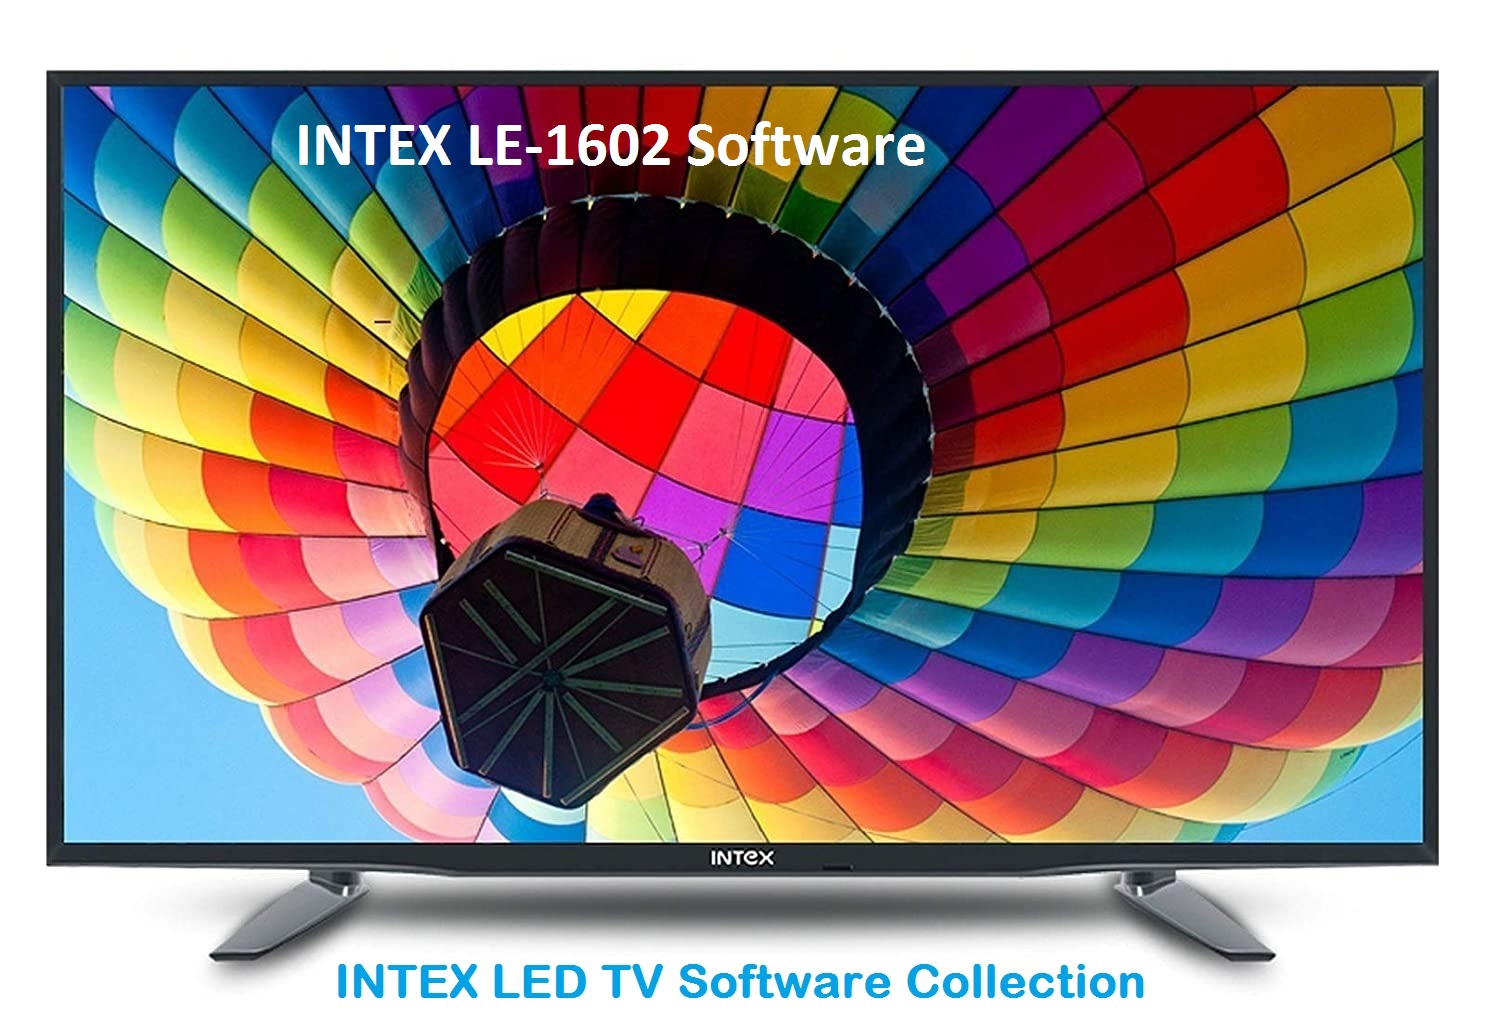 Intex Le-1602